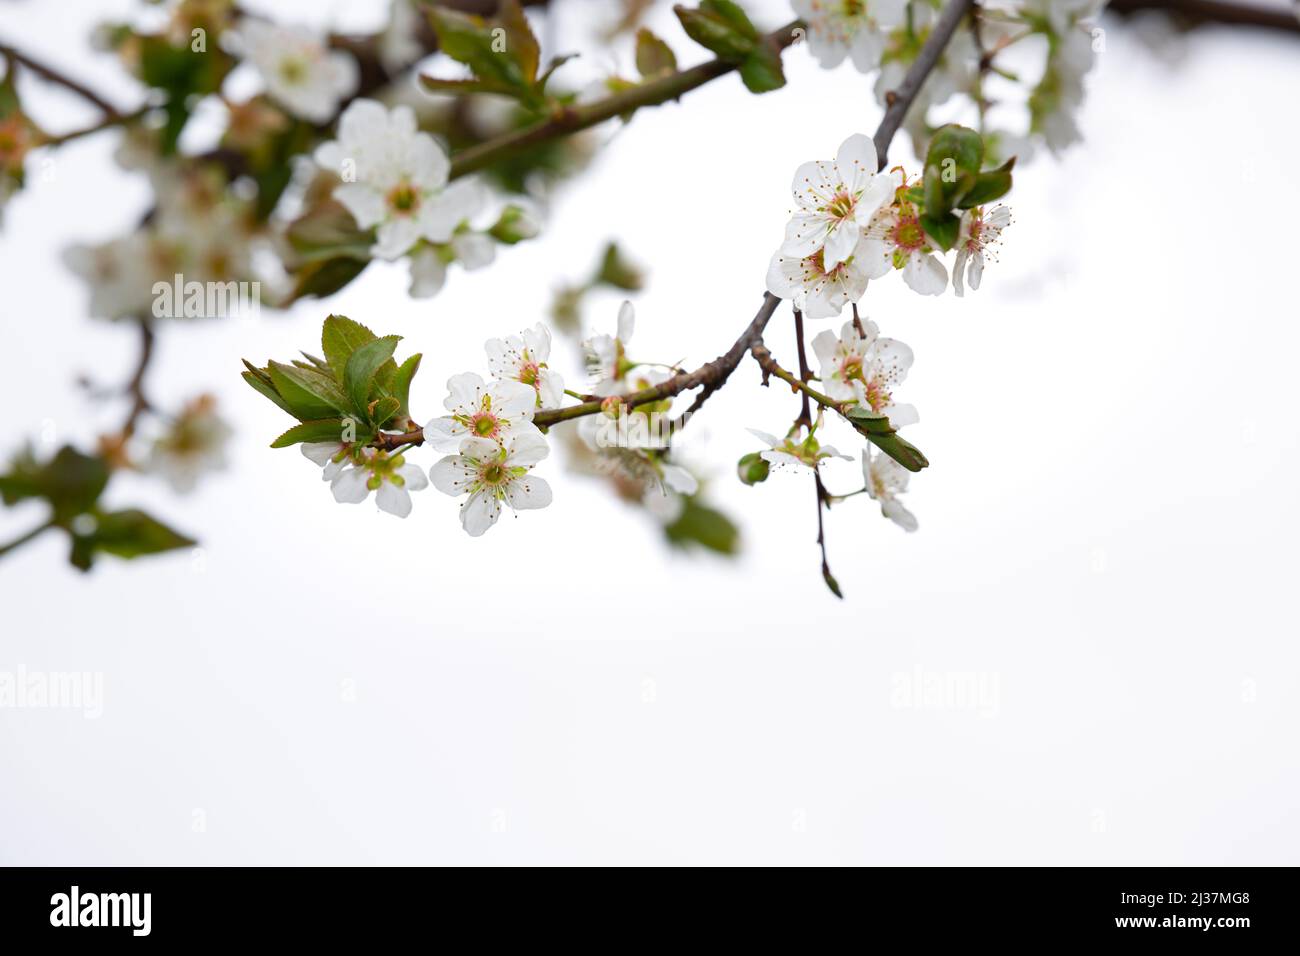 Selective focus of green plum fruit tree flowers on white isolated background. White flowers, harbinger of spring. Stock Photo